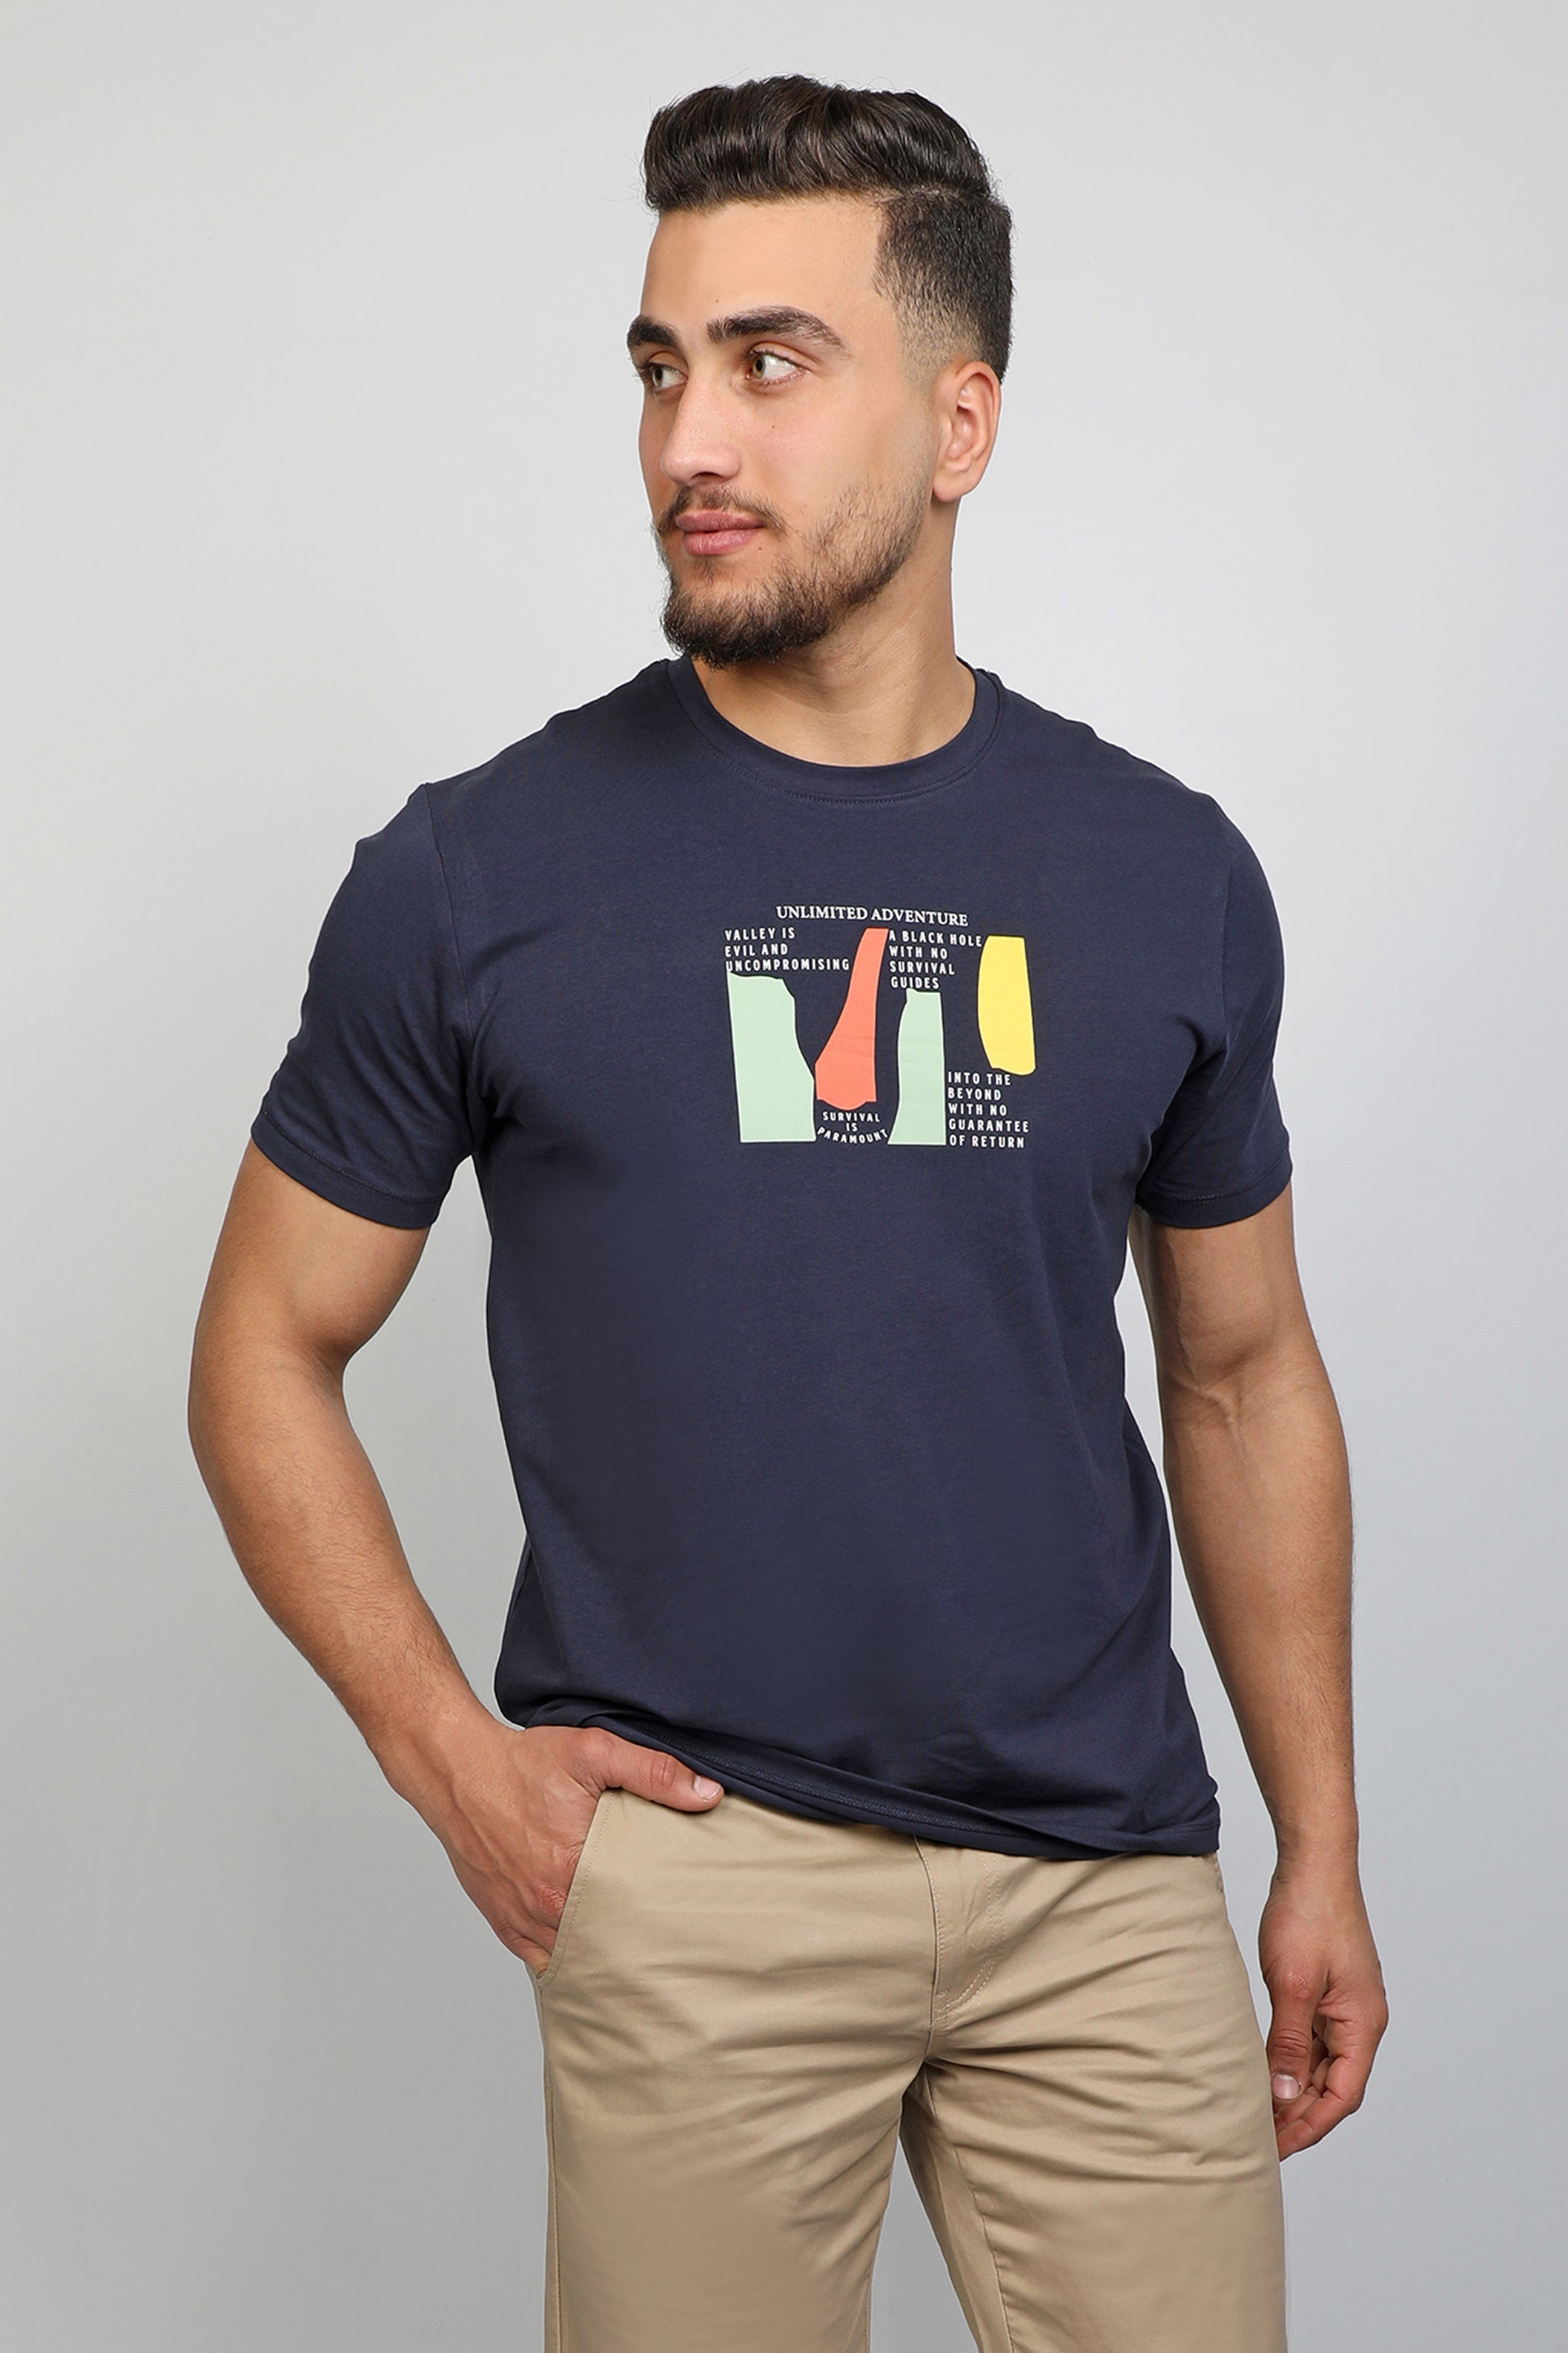 Dark Navy T-shirt Designed